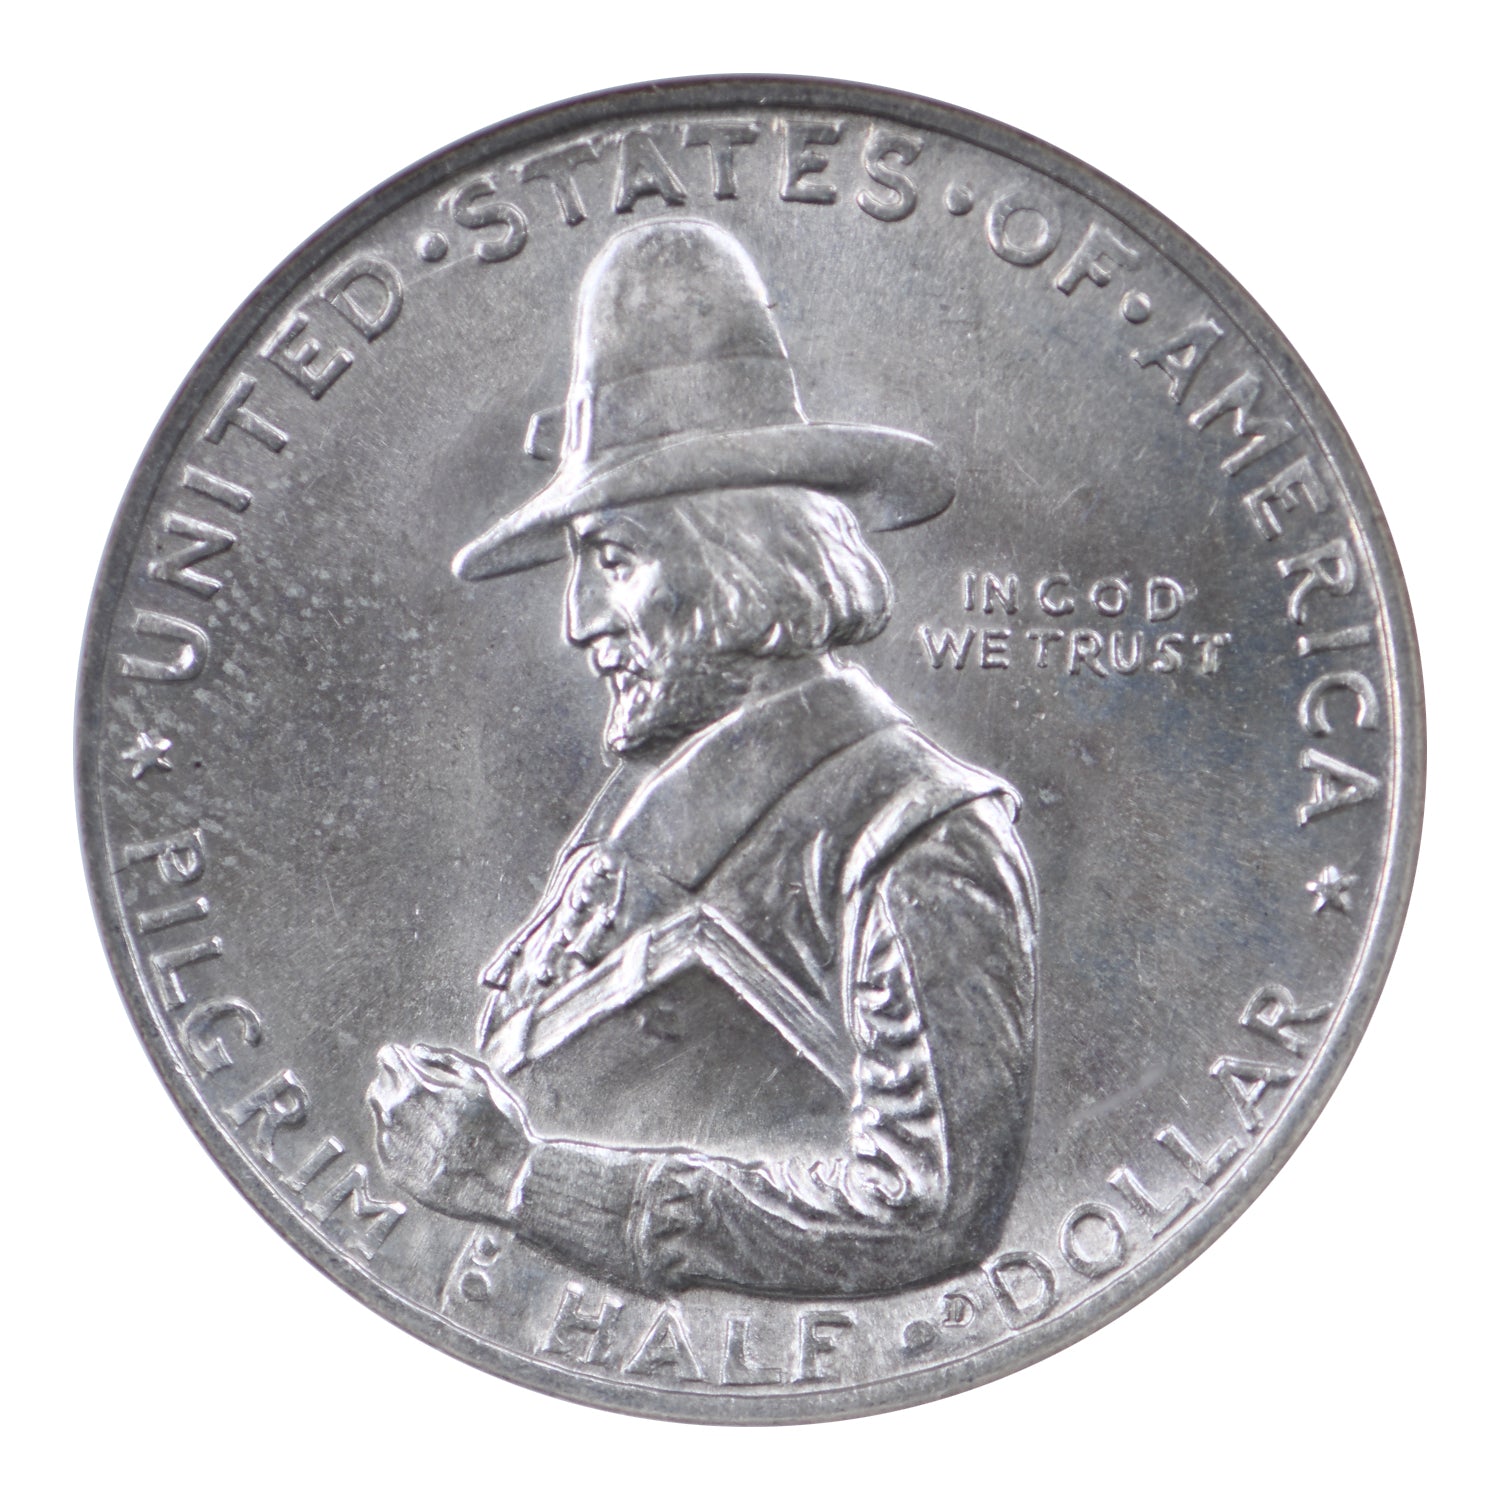 1920 Pilgrim Commemorative Silver Half Dollar NGC MS65